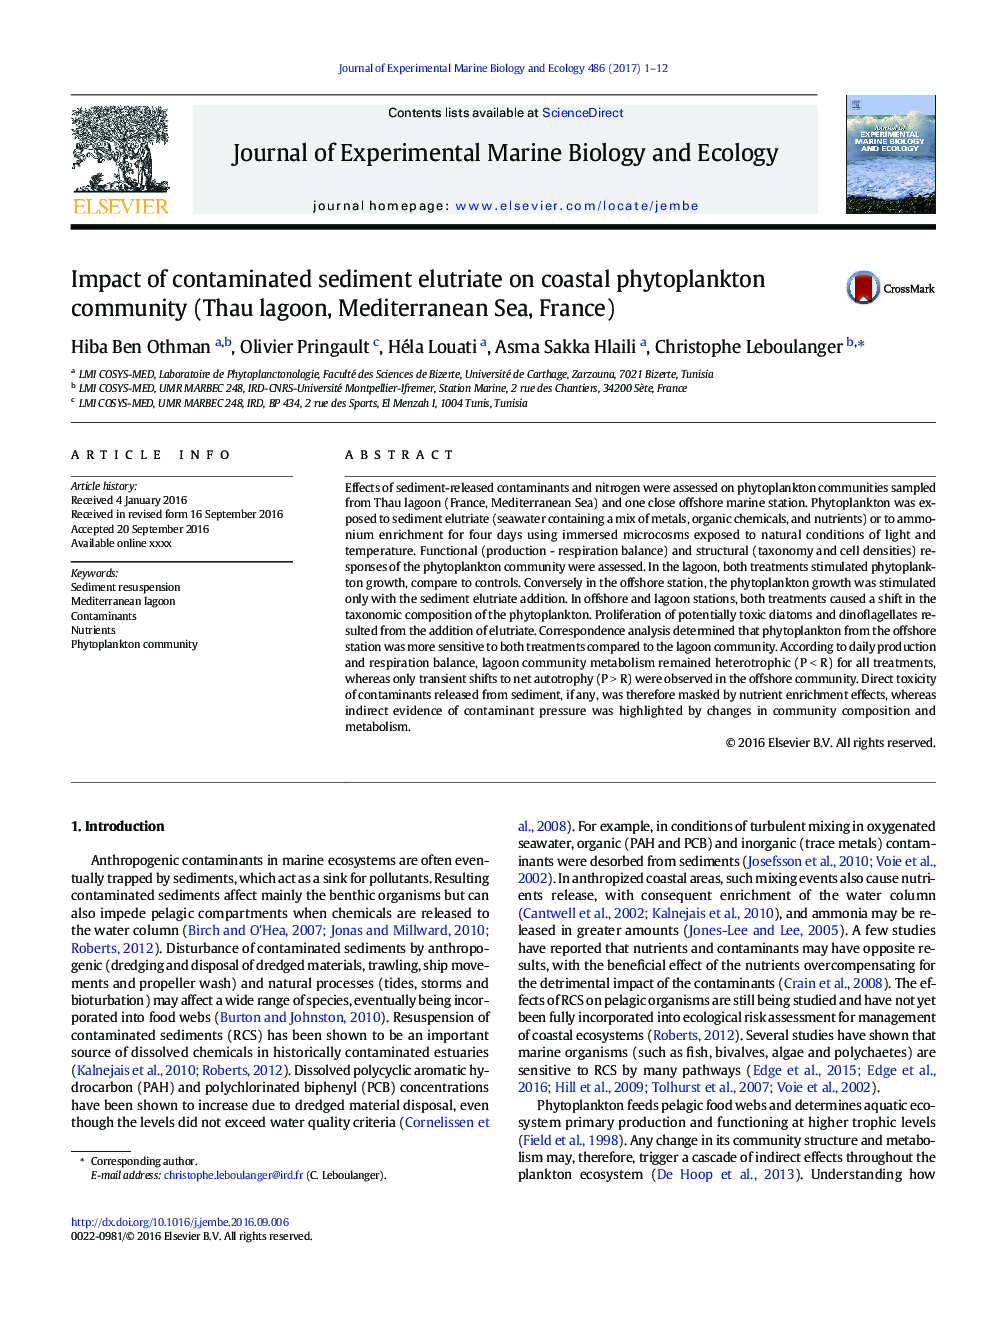 Impact of contaminated sediment elutriate on coastal phytoplankton community (Thau lagoon, Mediterranean Sea, France)